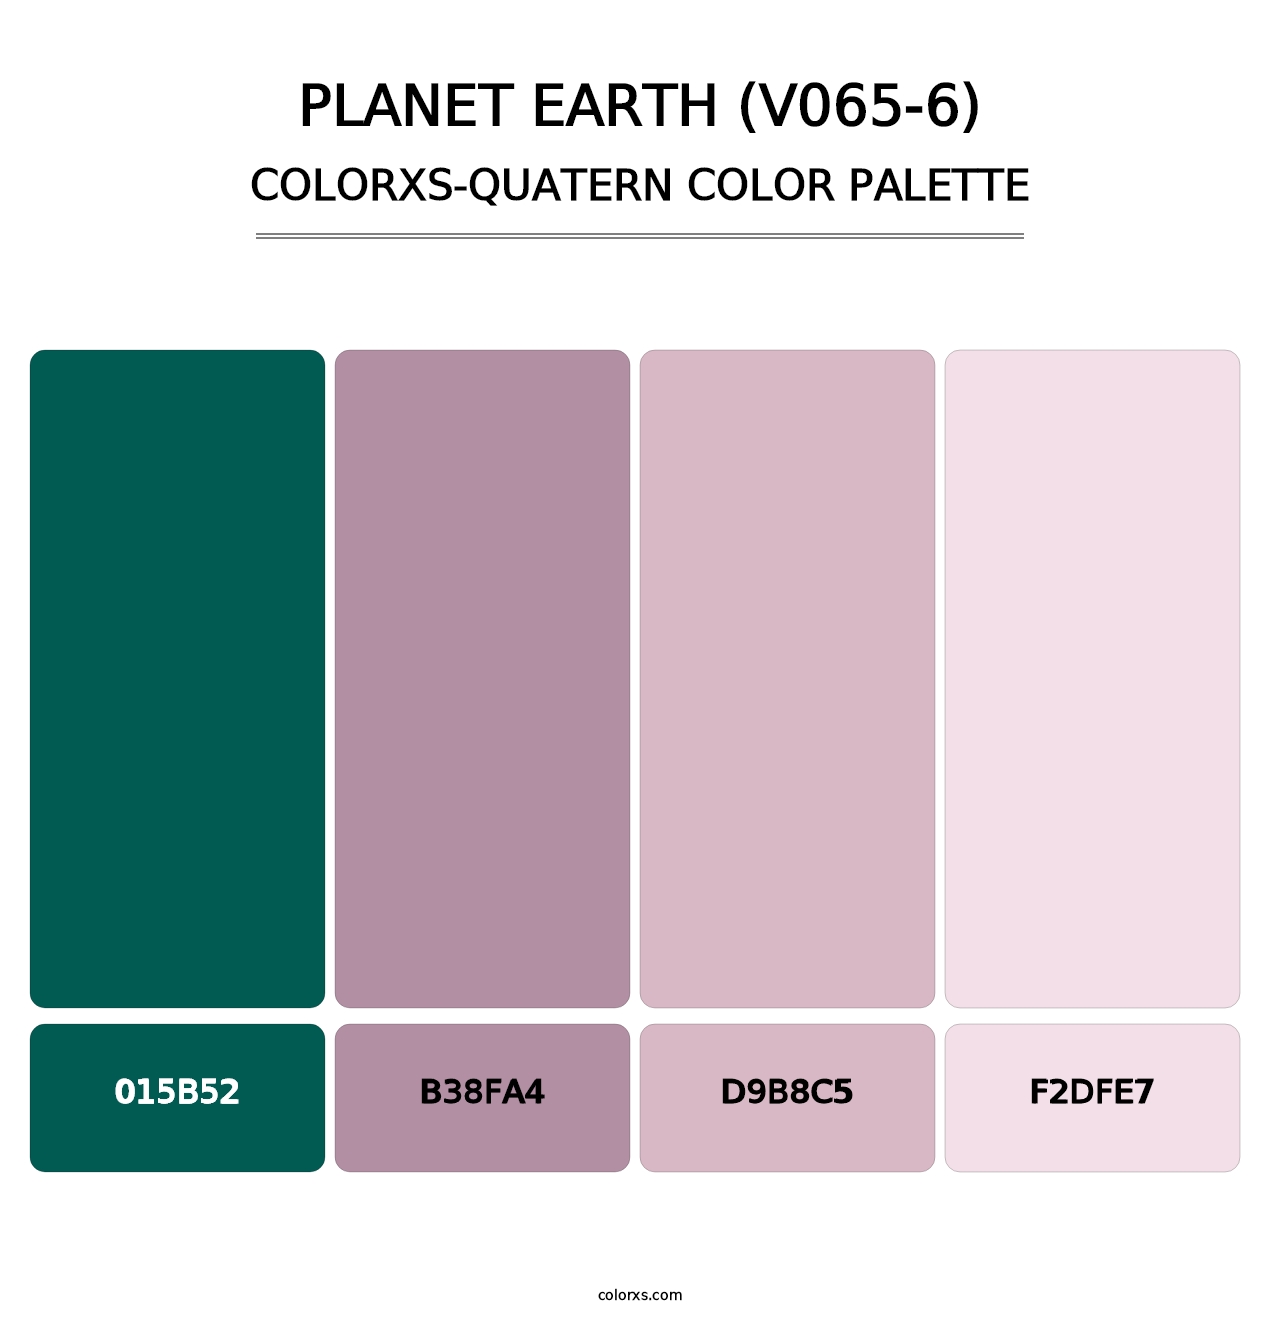 Planet Earth (V065-6) - Colorxs Quatern Palette